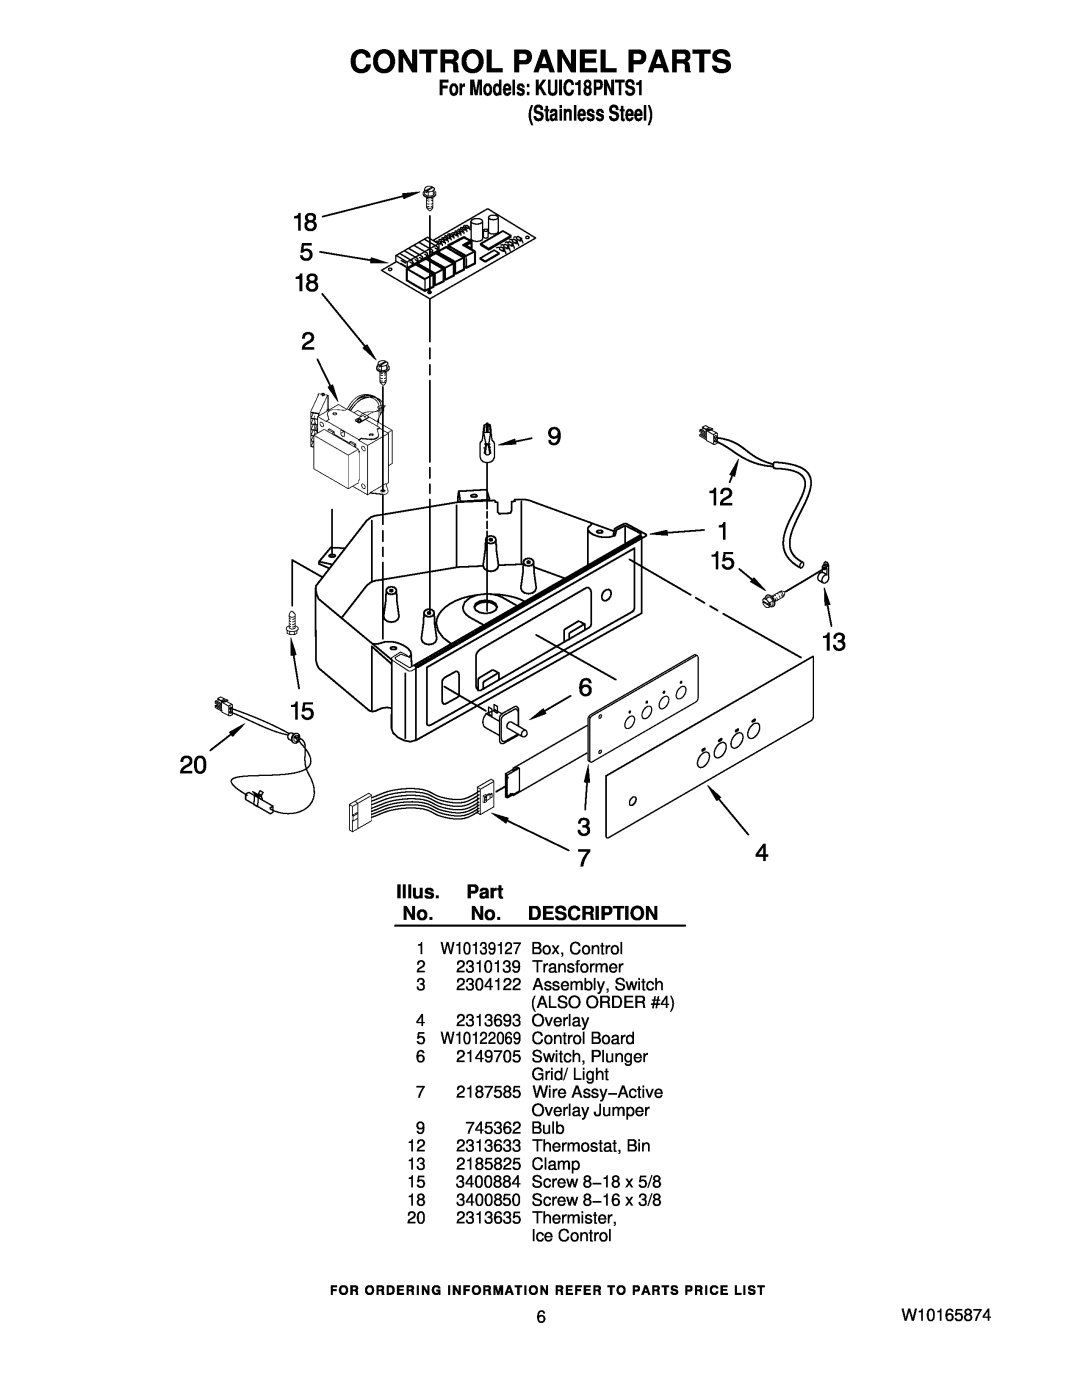 KitchenAid manual Control Panel Parts, For Models KUIC18PNTS1 Stainless Steel, Illus. Part No. No. DESCRIPTION 